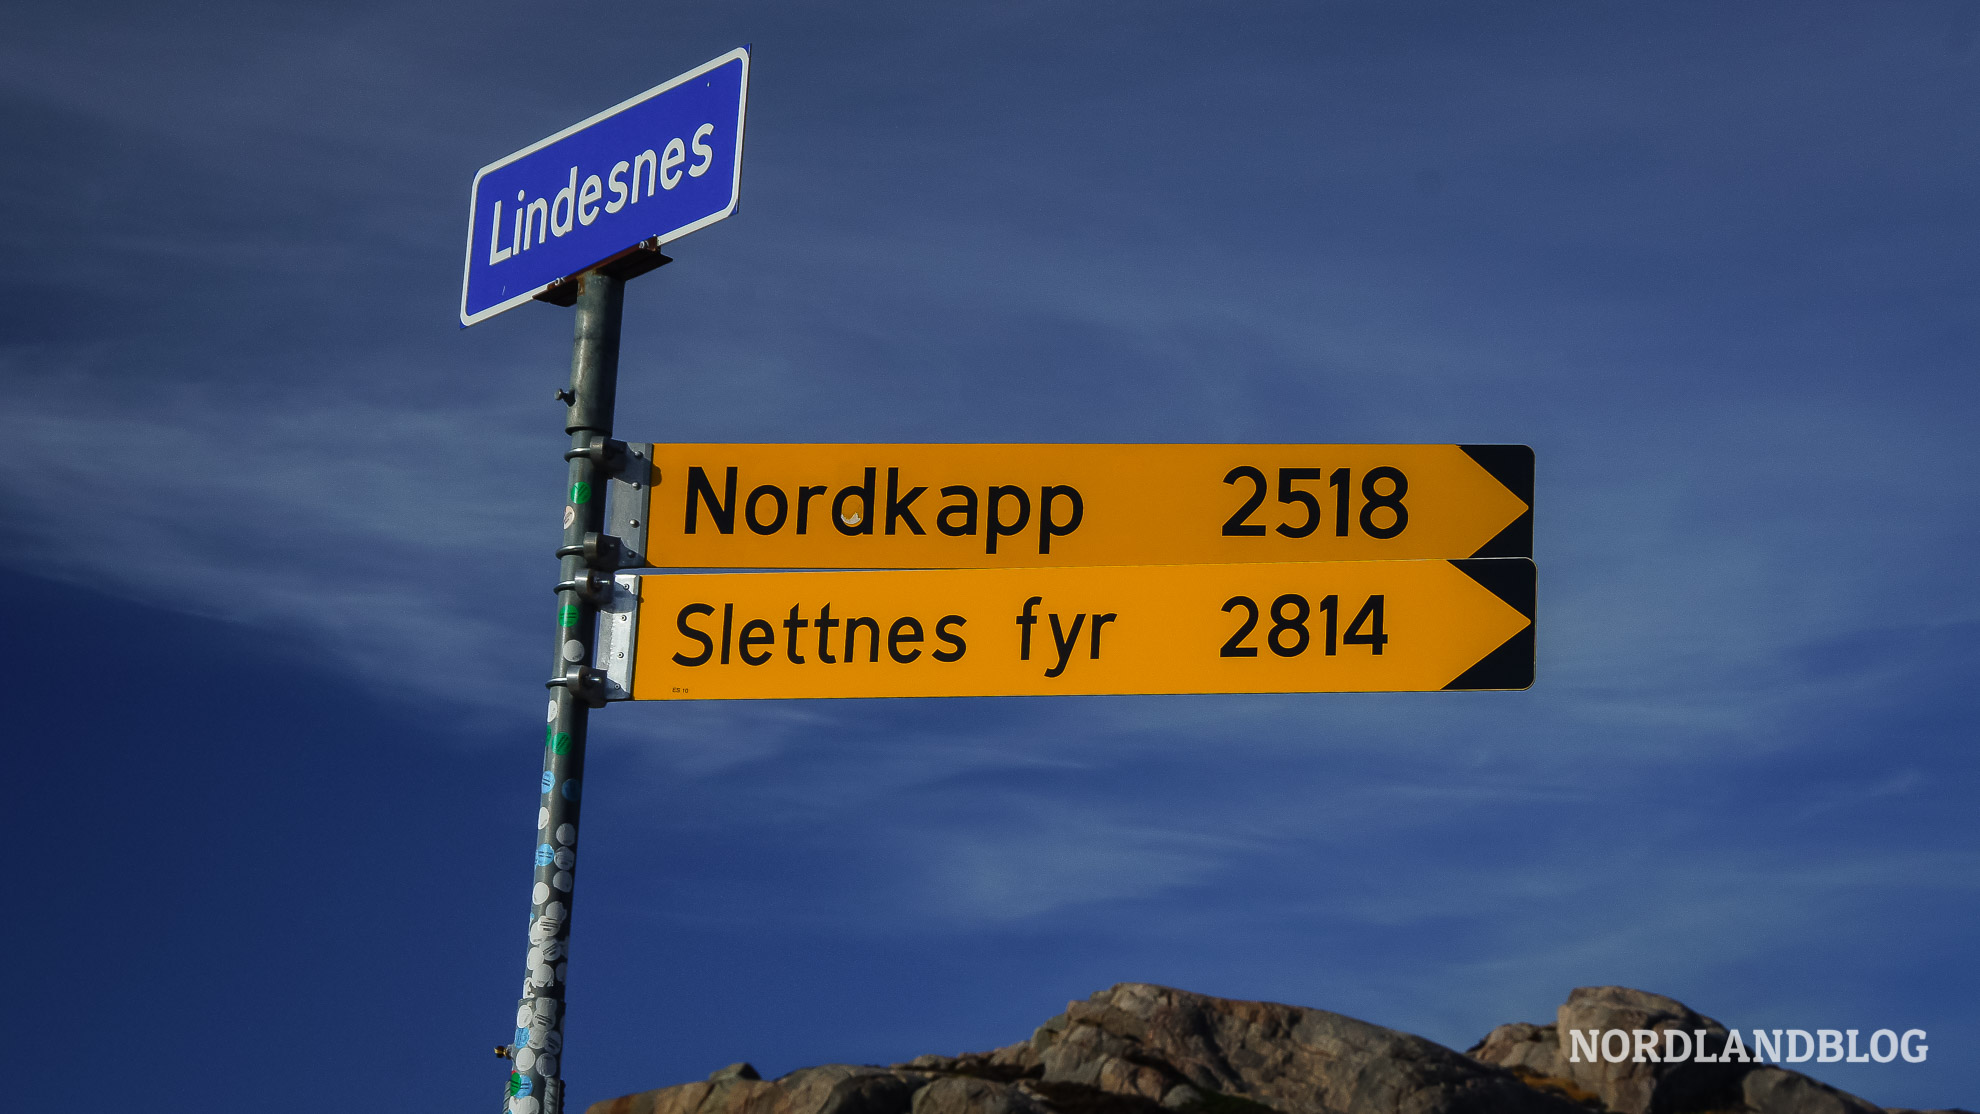 Wegweiser Nordkapp am Leuchtturm Lindesnes Südkap Norwegen (Nordlandblog)